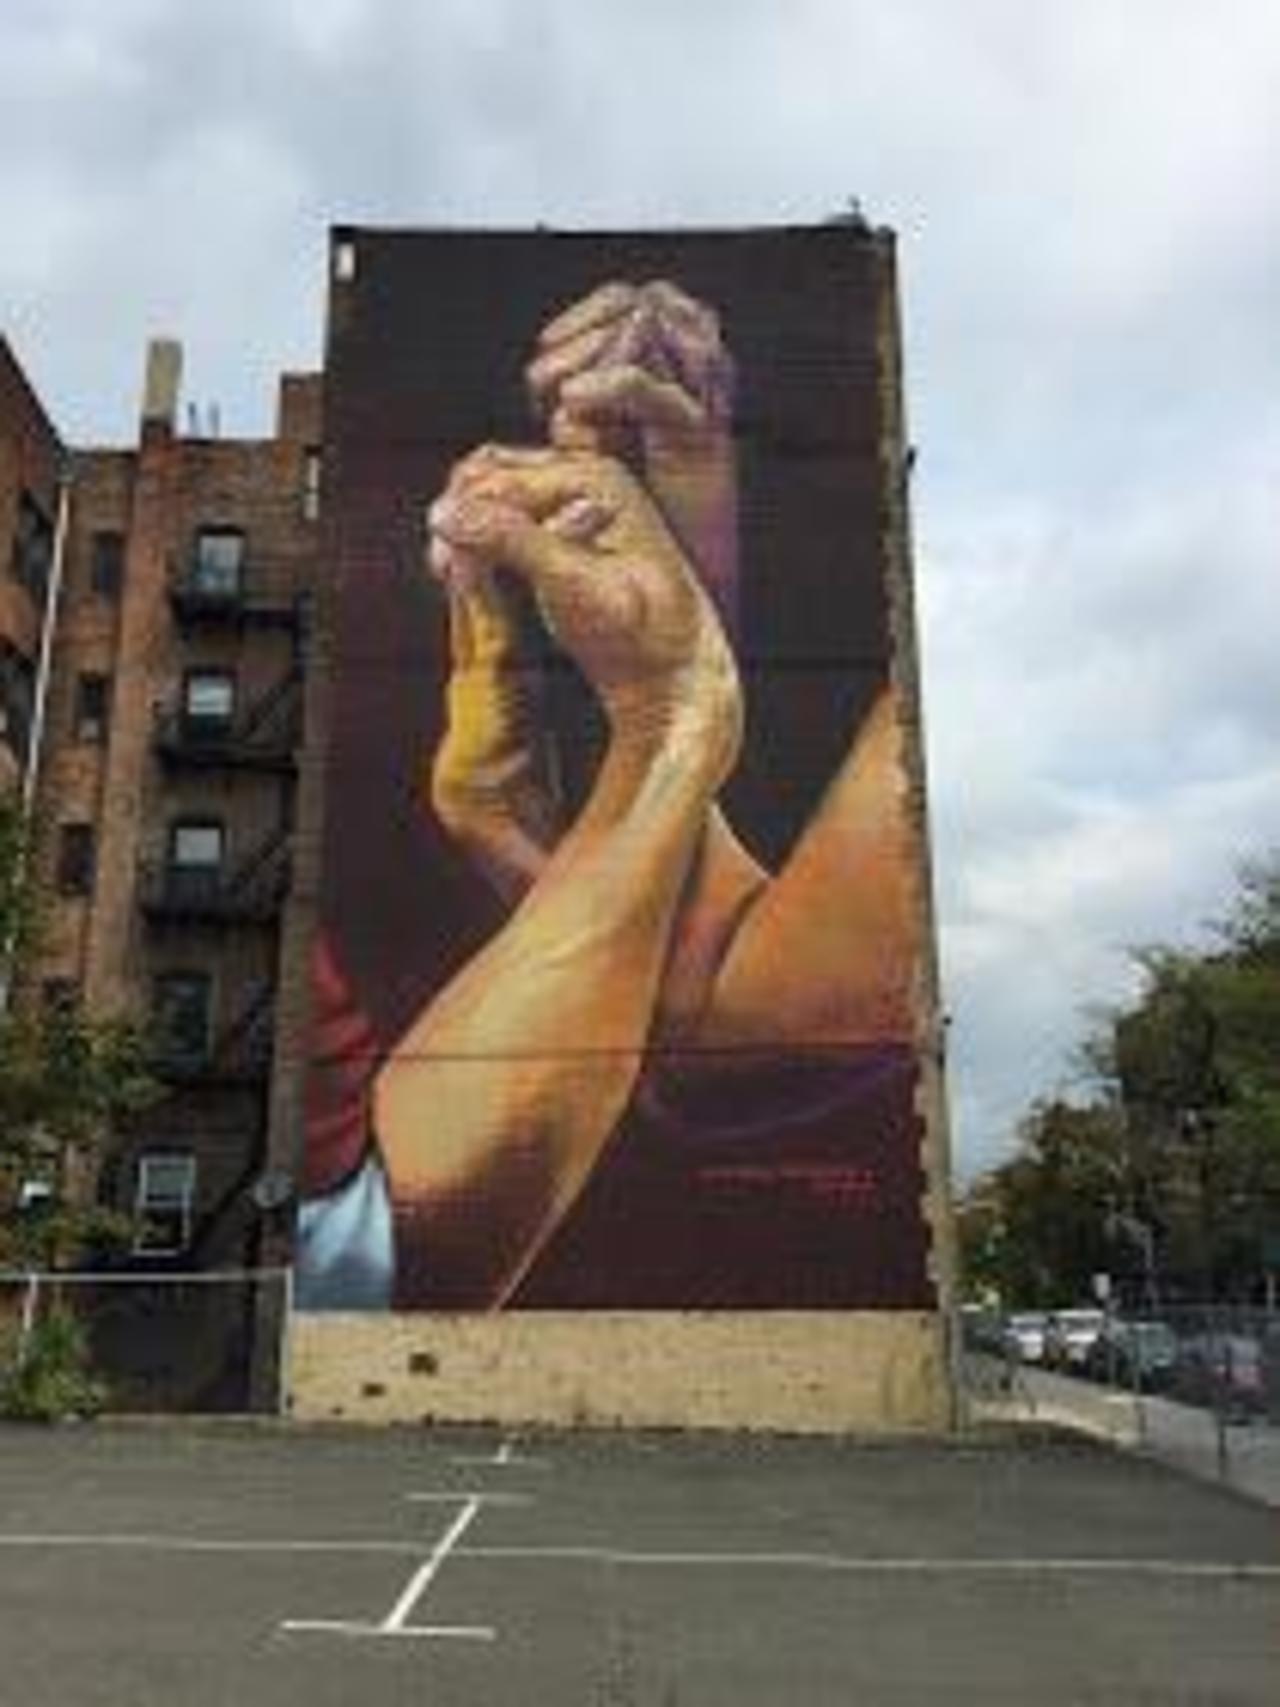 #new #streetart by #Case #Jersey City, #USA #switch #graffiti #bedifferent #art #arte http://t.co/GwjVEbiTo8